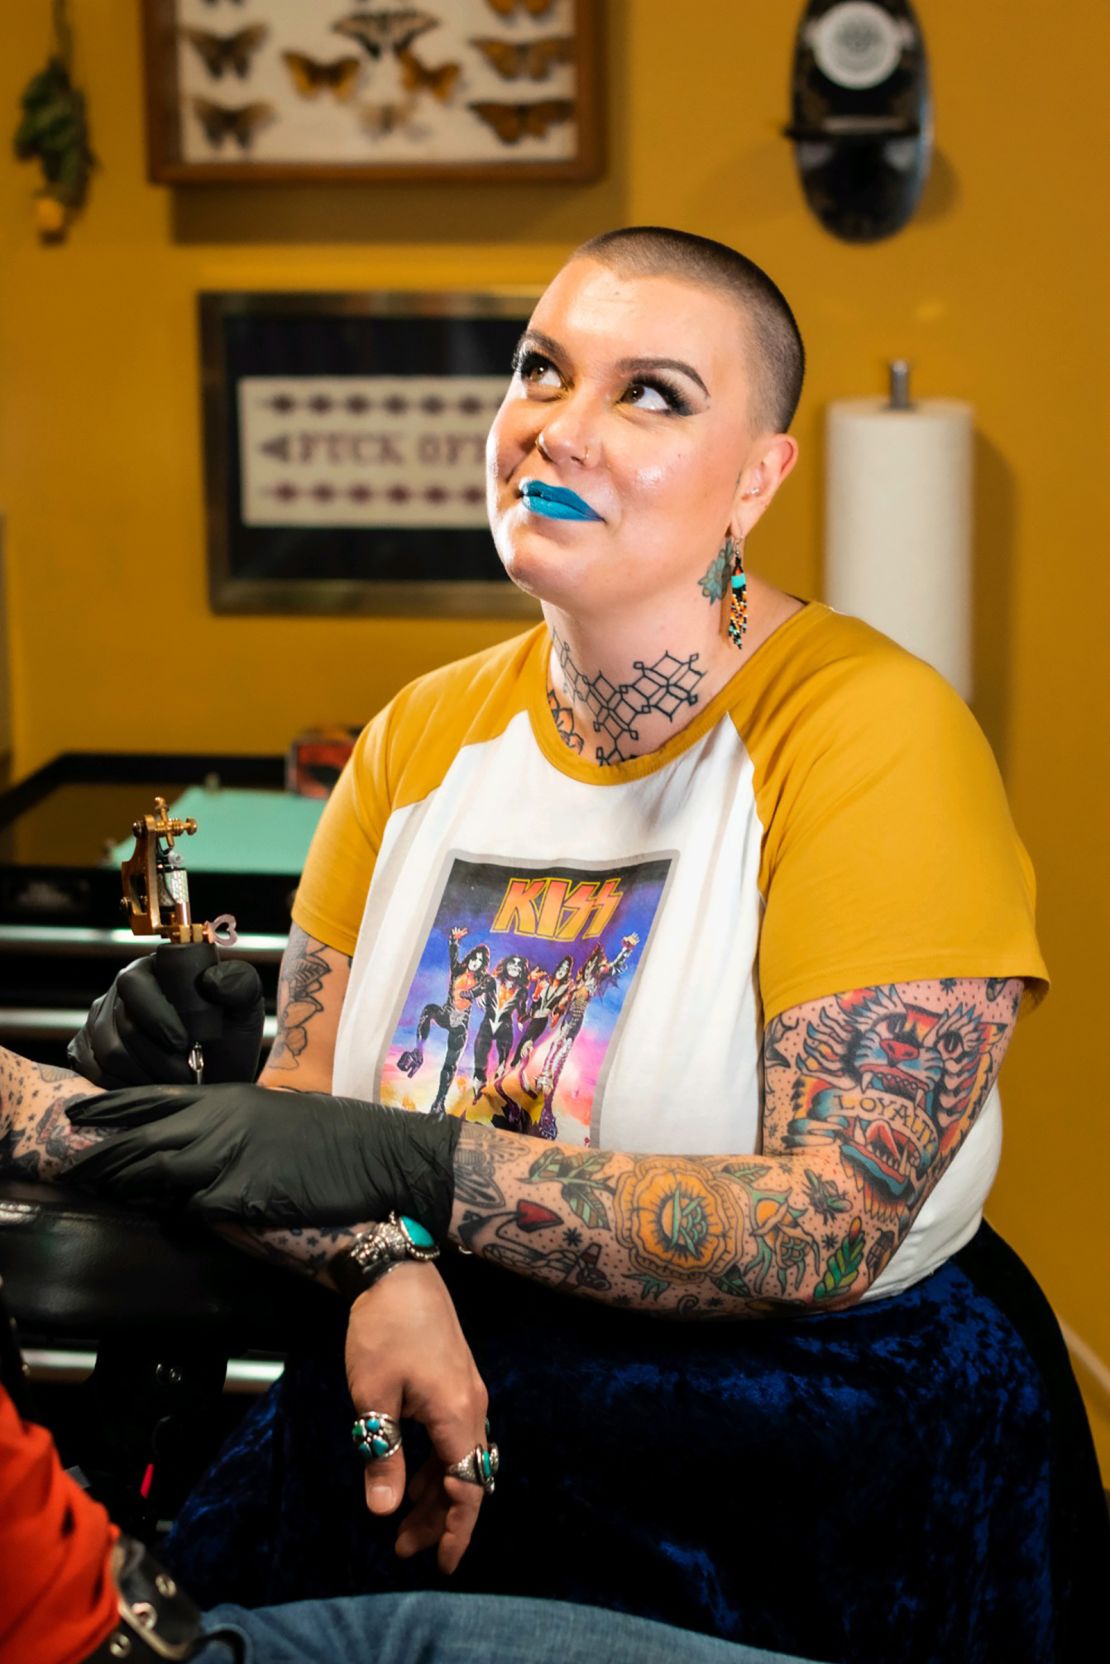 20 Roll Tattoos That Celebrate Fat Bodies